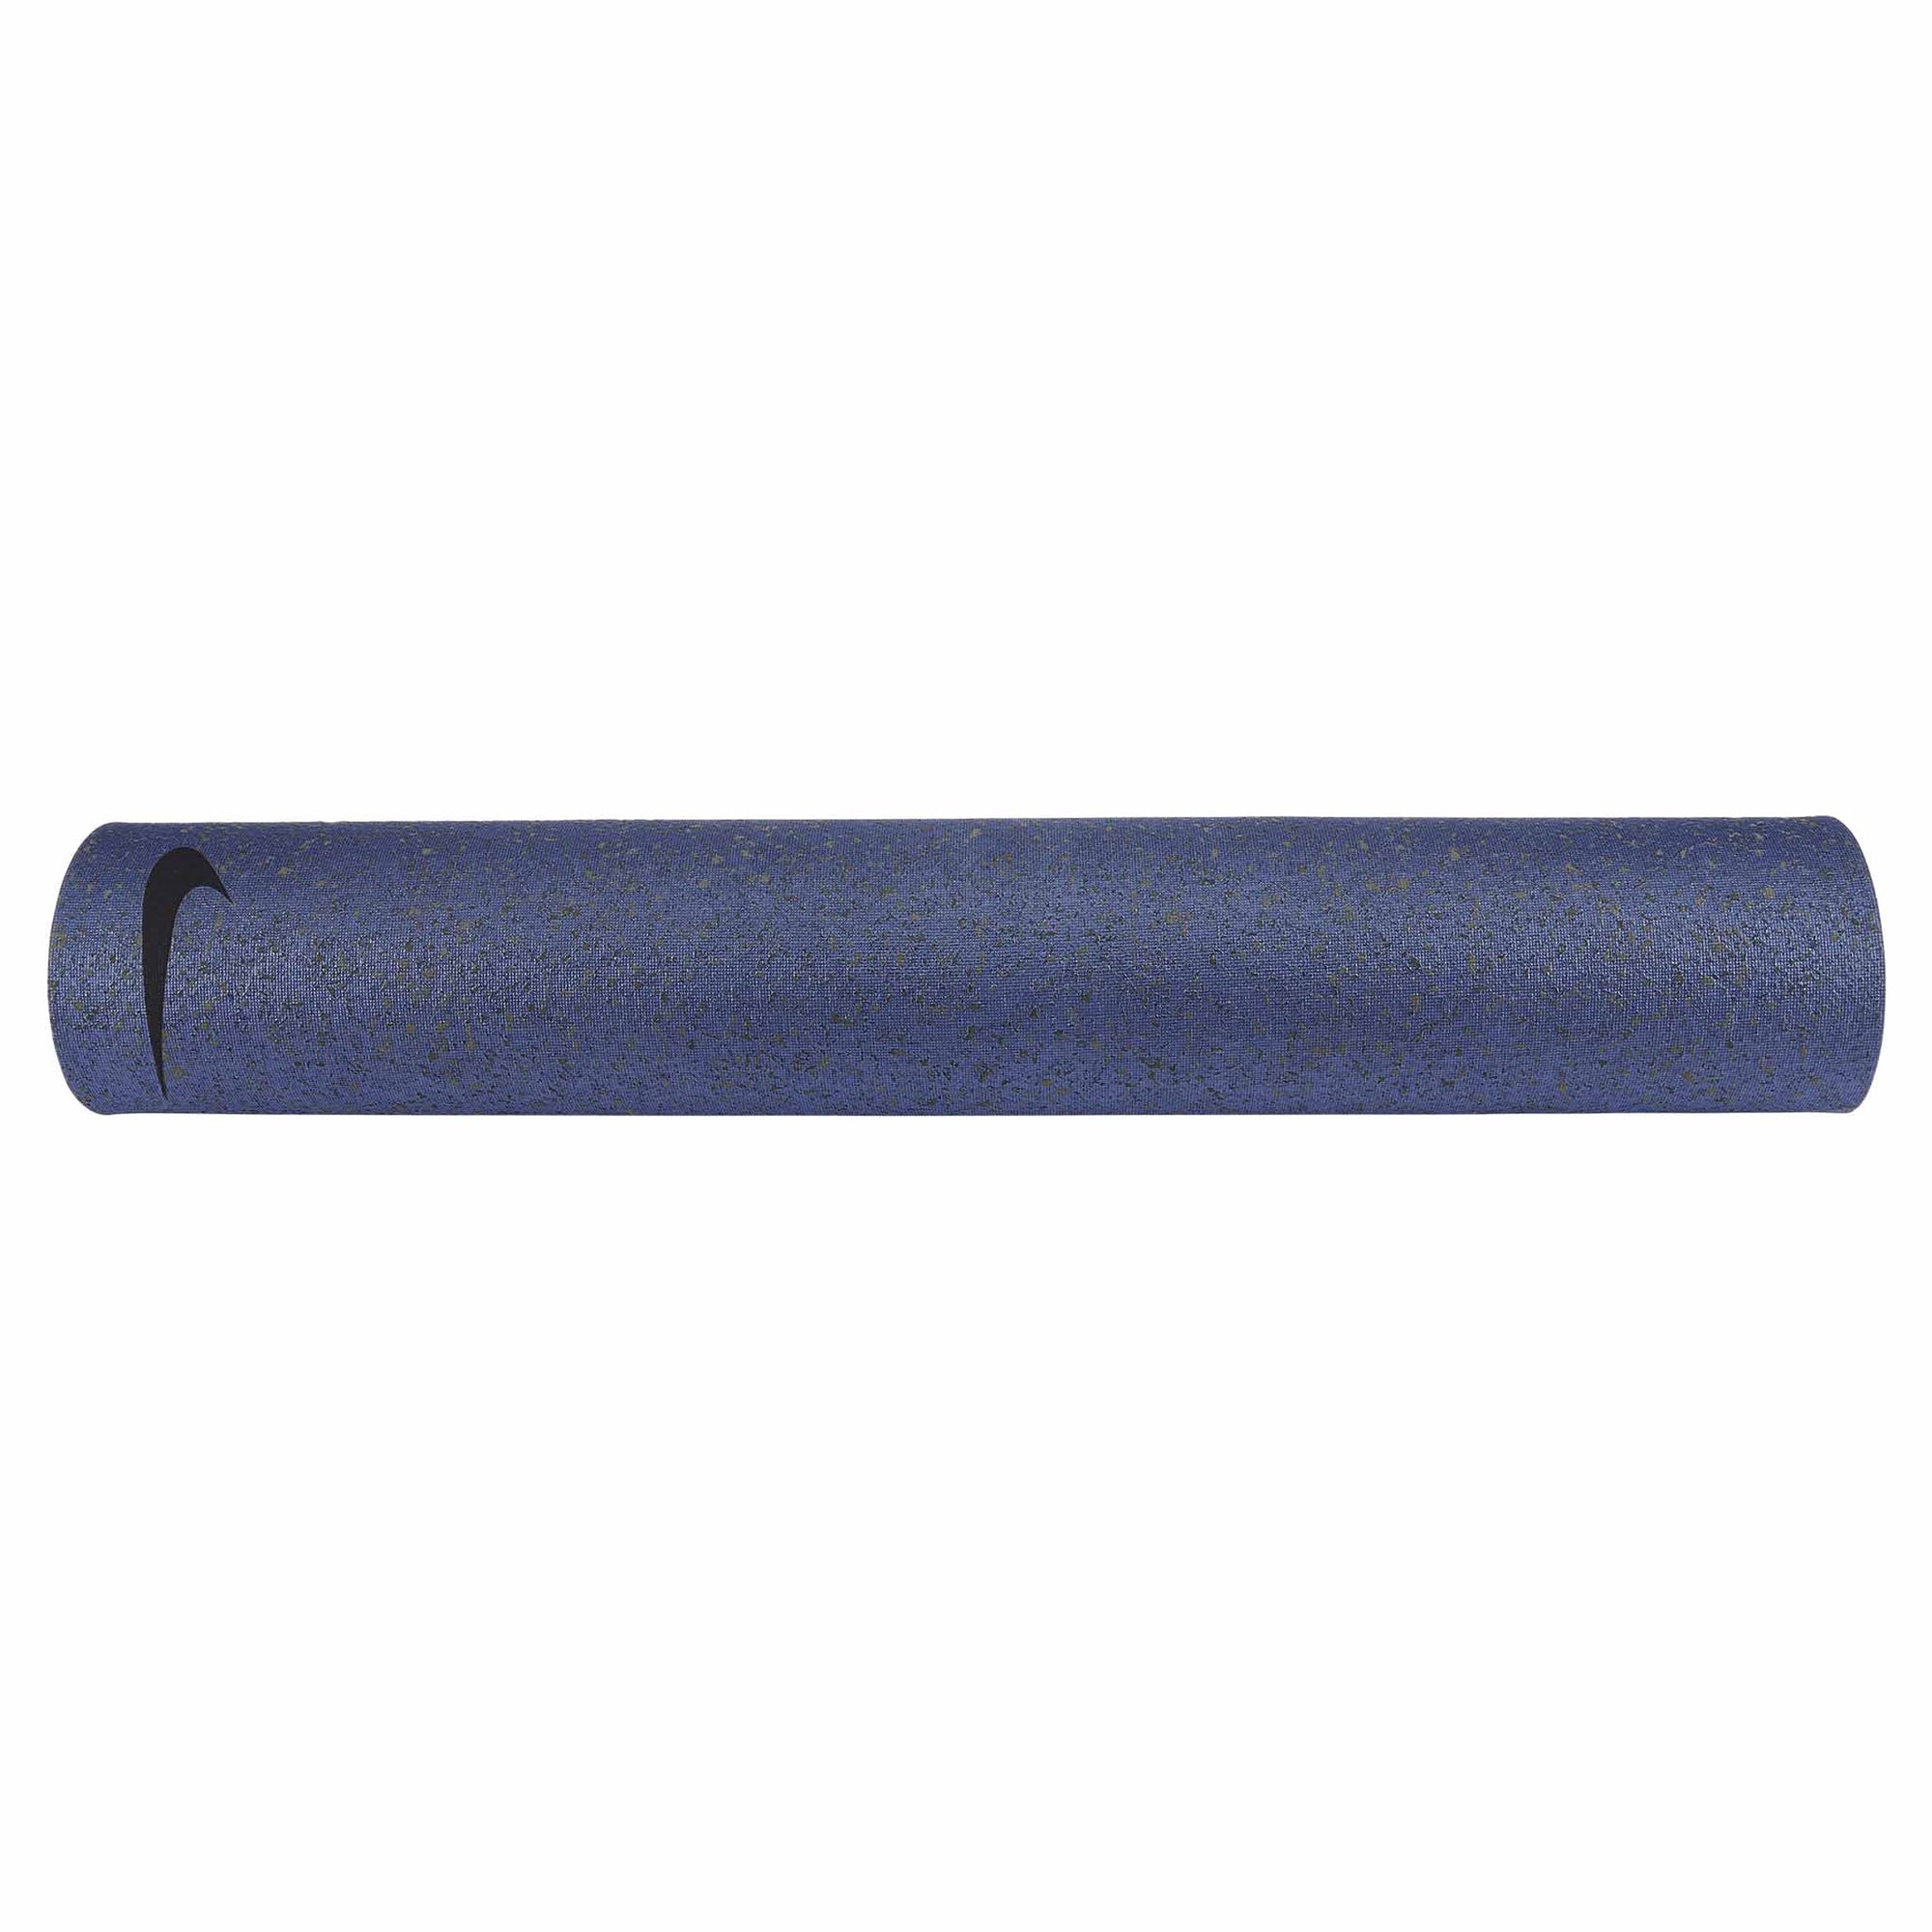 Nike Flow Yoga Mat 4mm tapis de yoga - Midnight Navy / Black